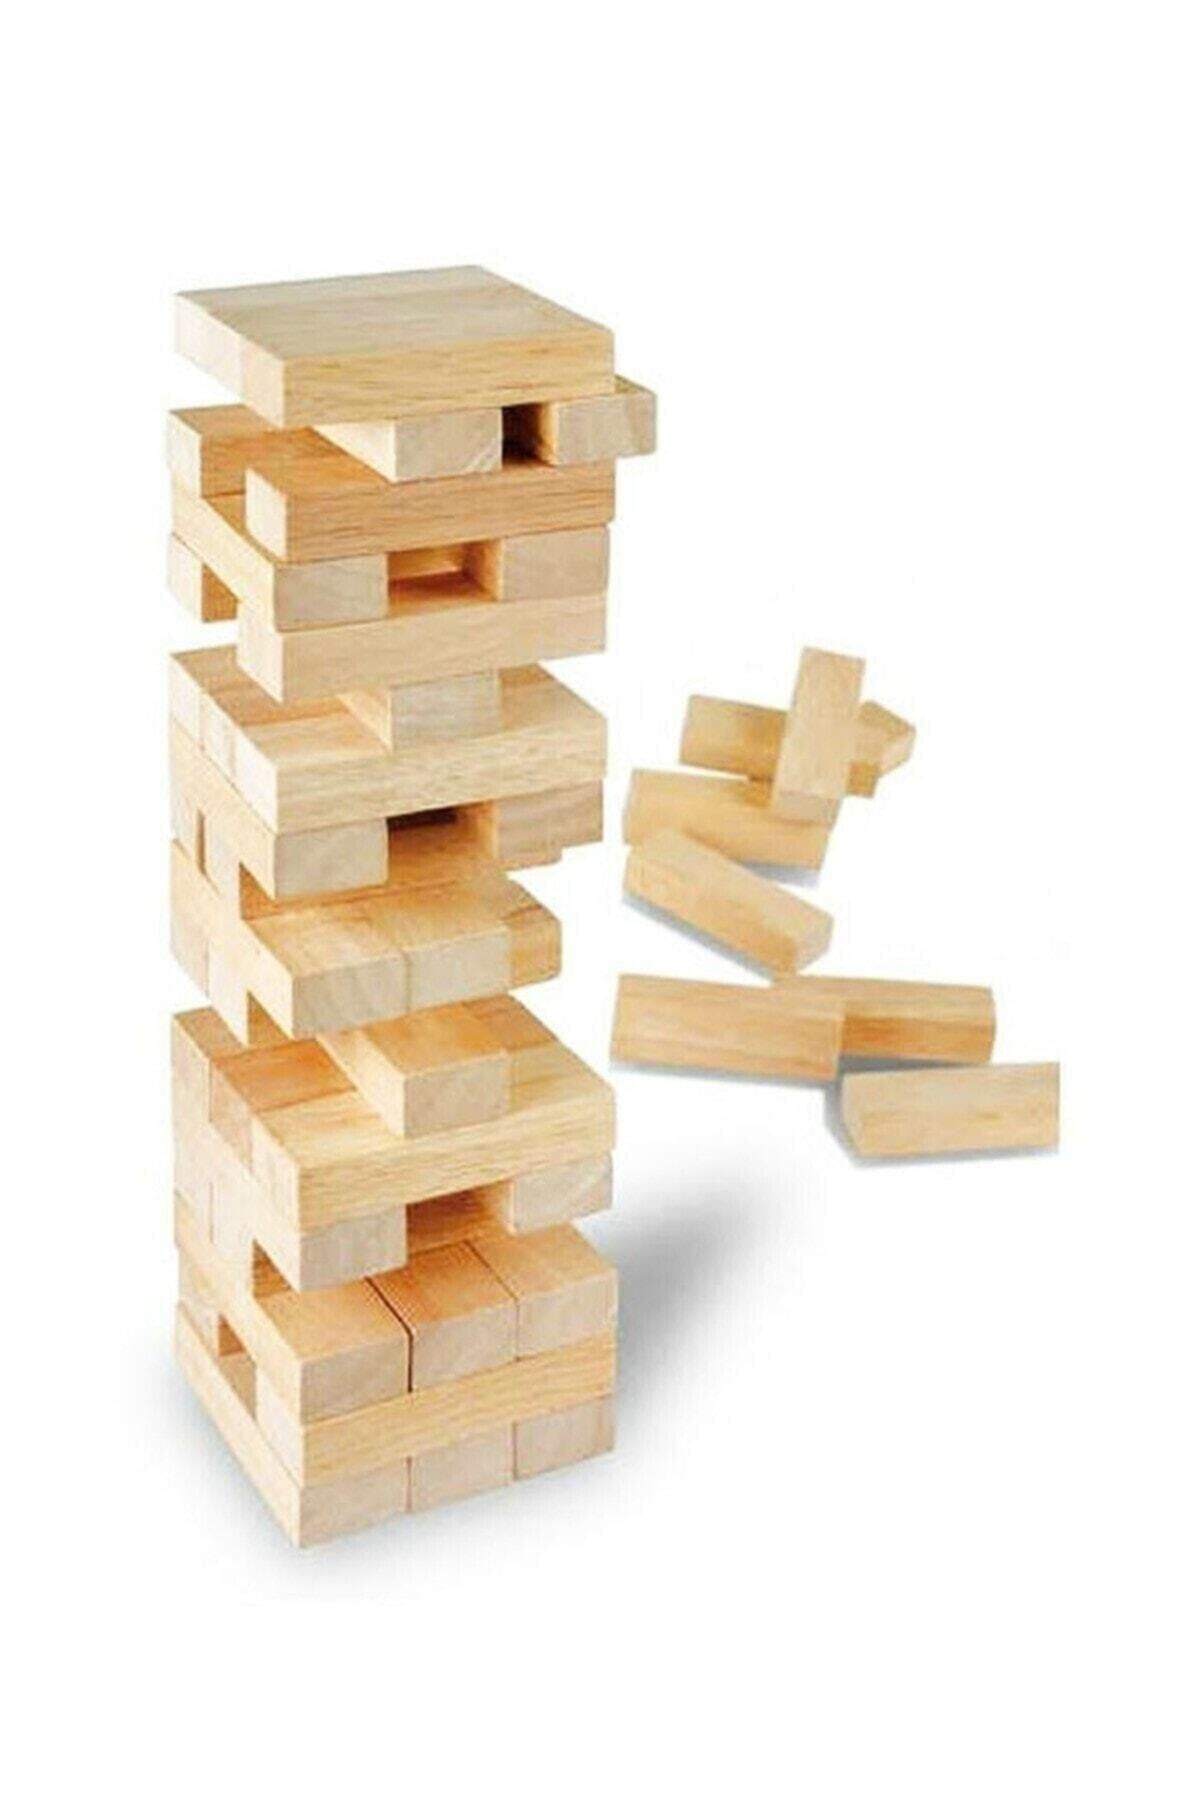 Игра башня. Игра башня (Дженга). Дженга игра каланча. Игра деревянная башня Дженга. Игра с деревянными брусочками Дженга.